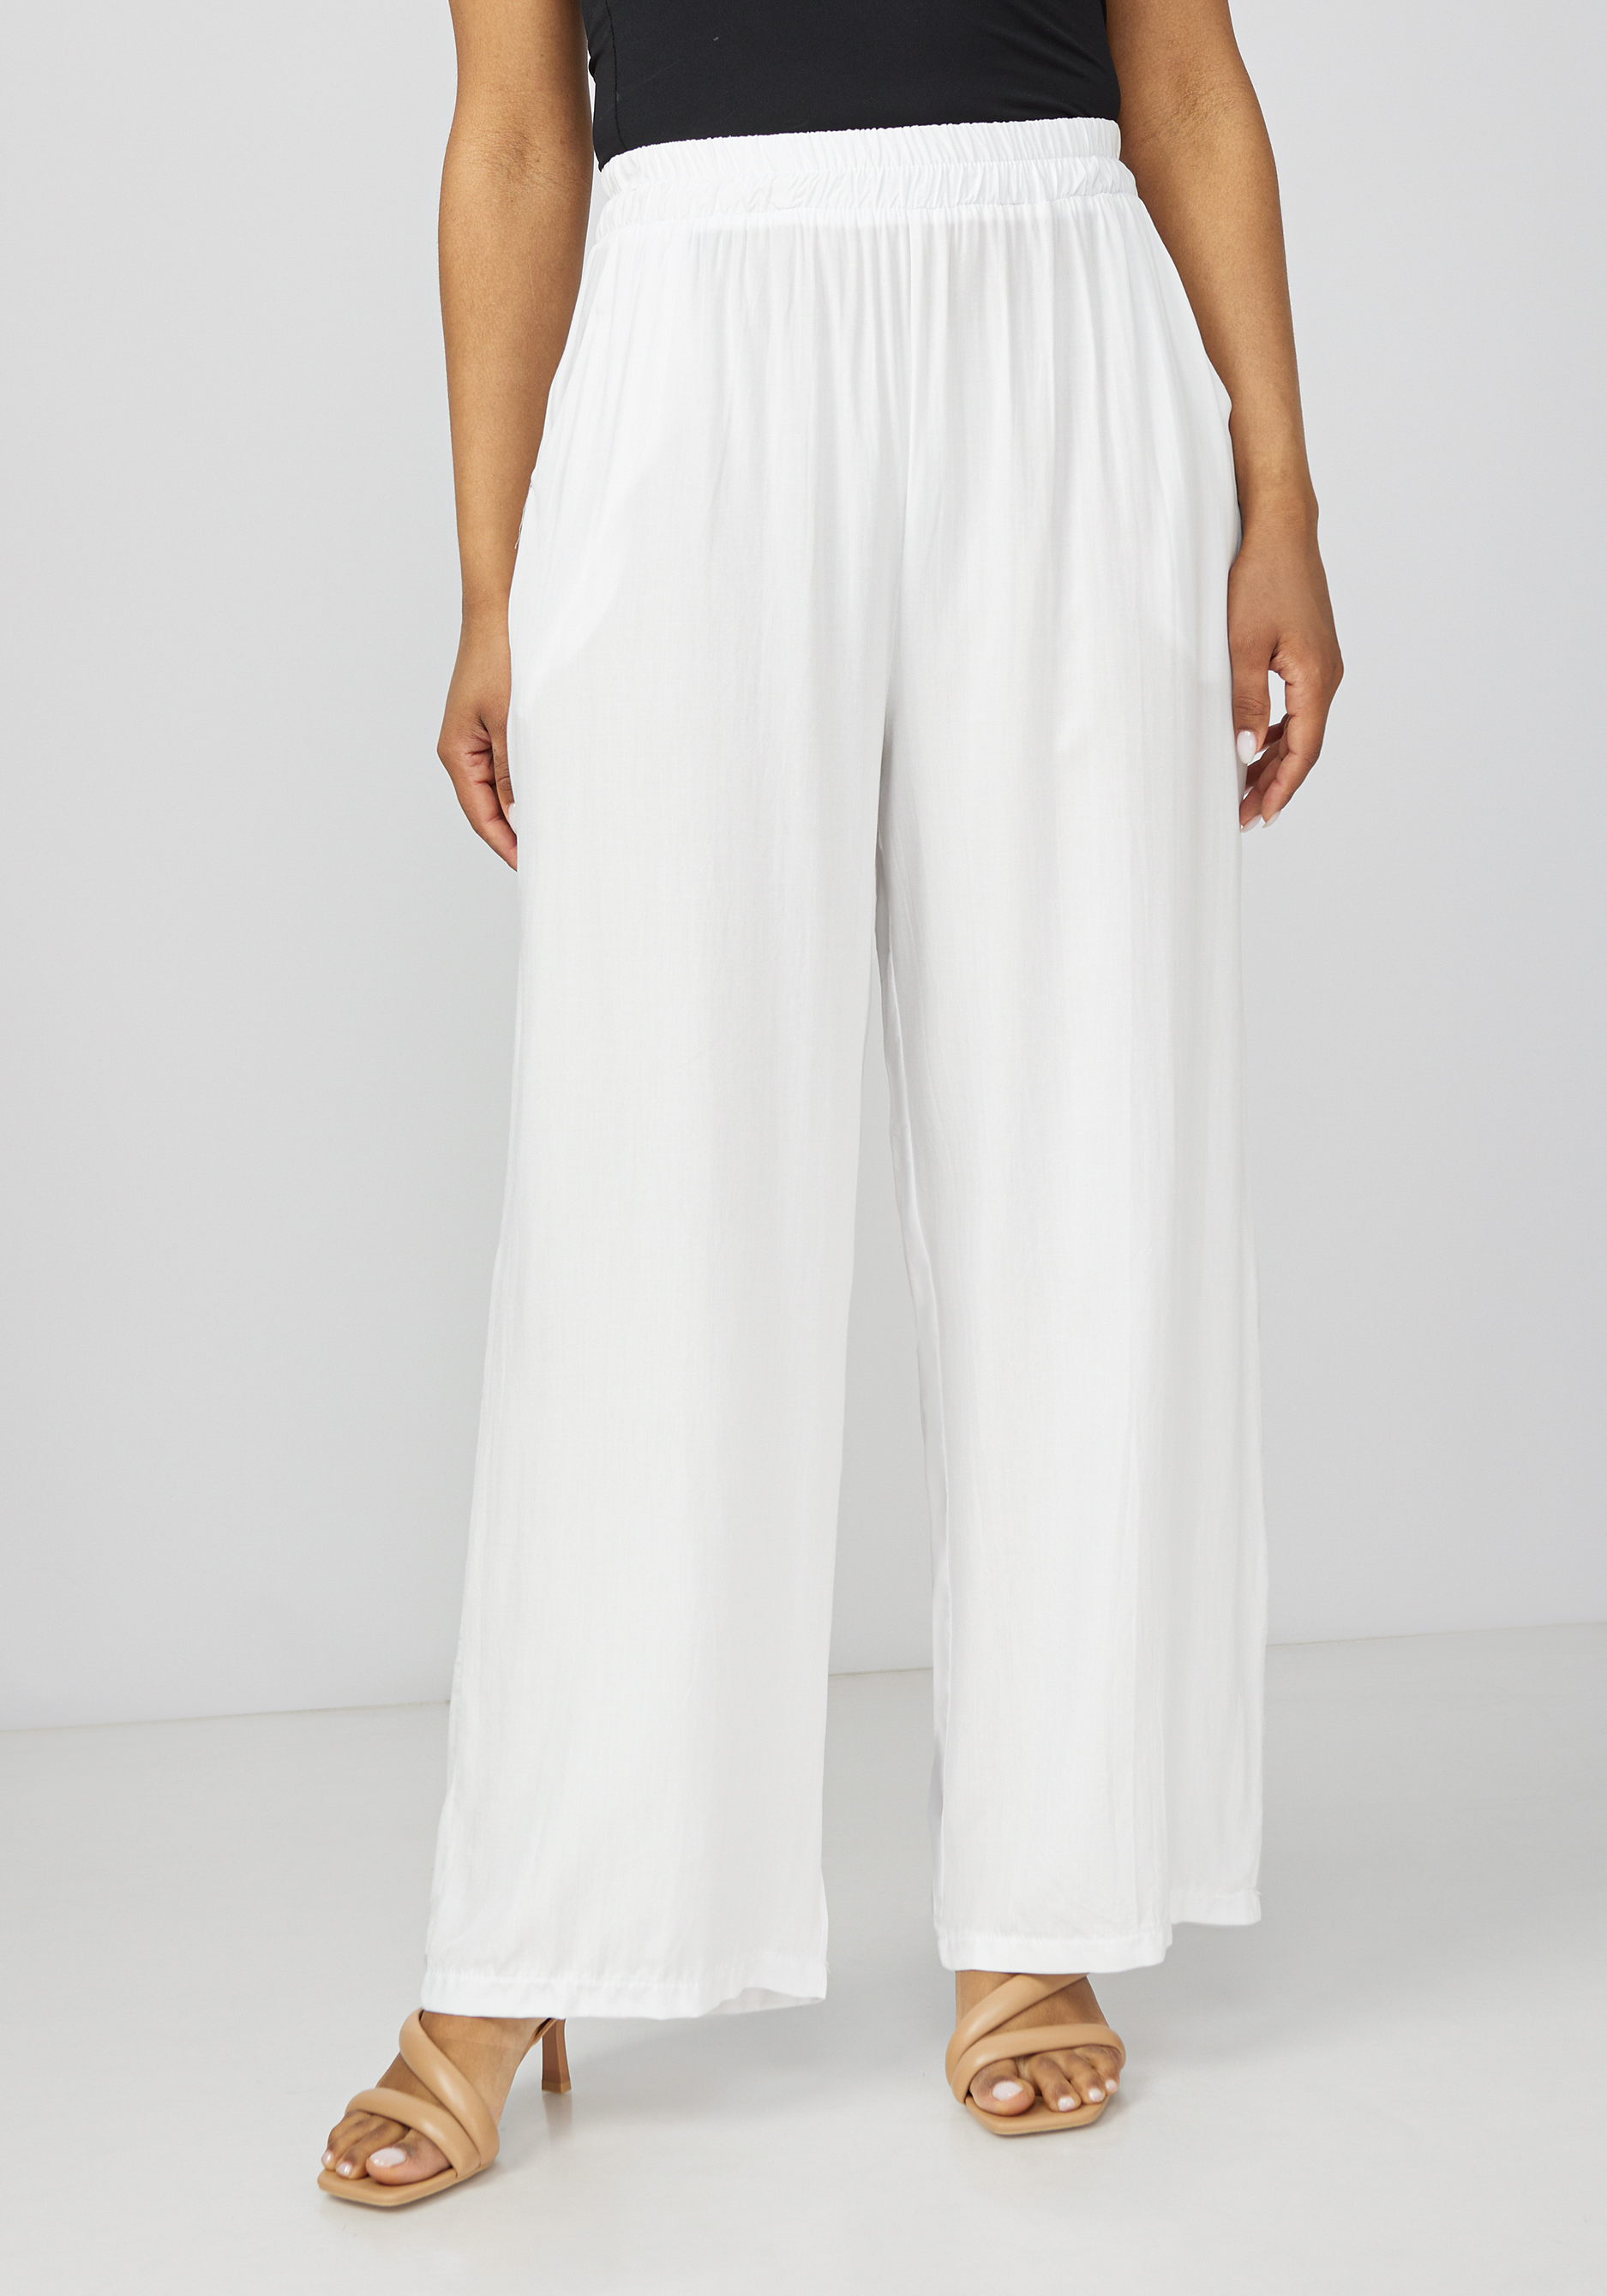 Штапельные брюки "Барбара" Simple Story, цвет белый, размер 56 - фото 4